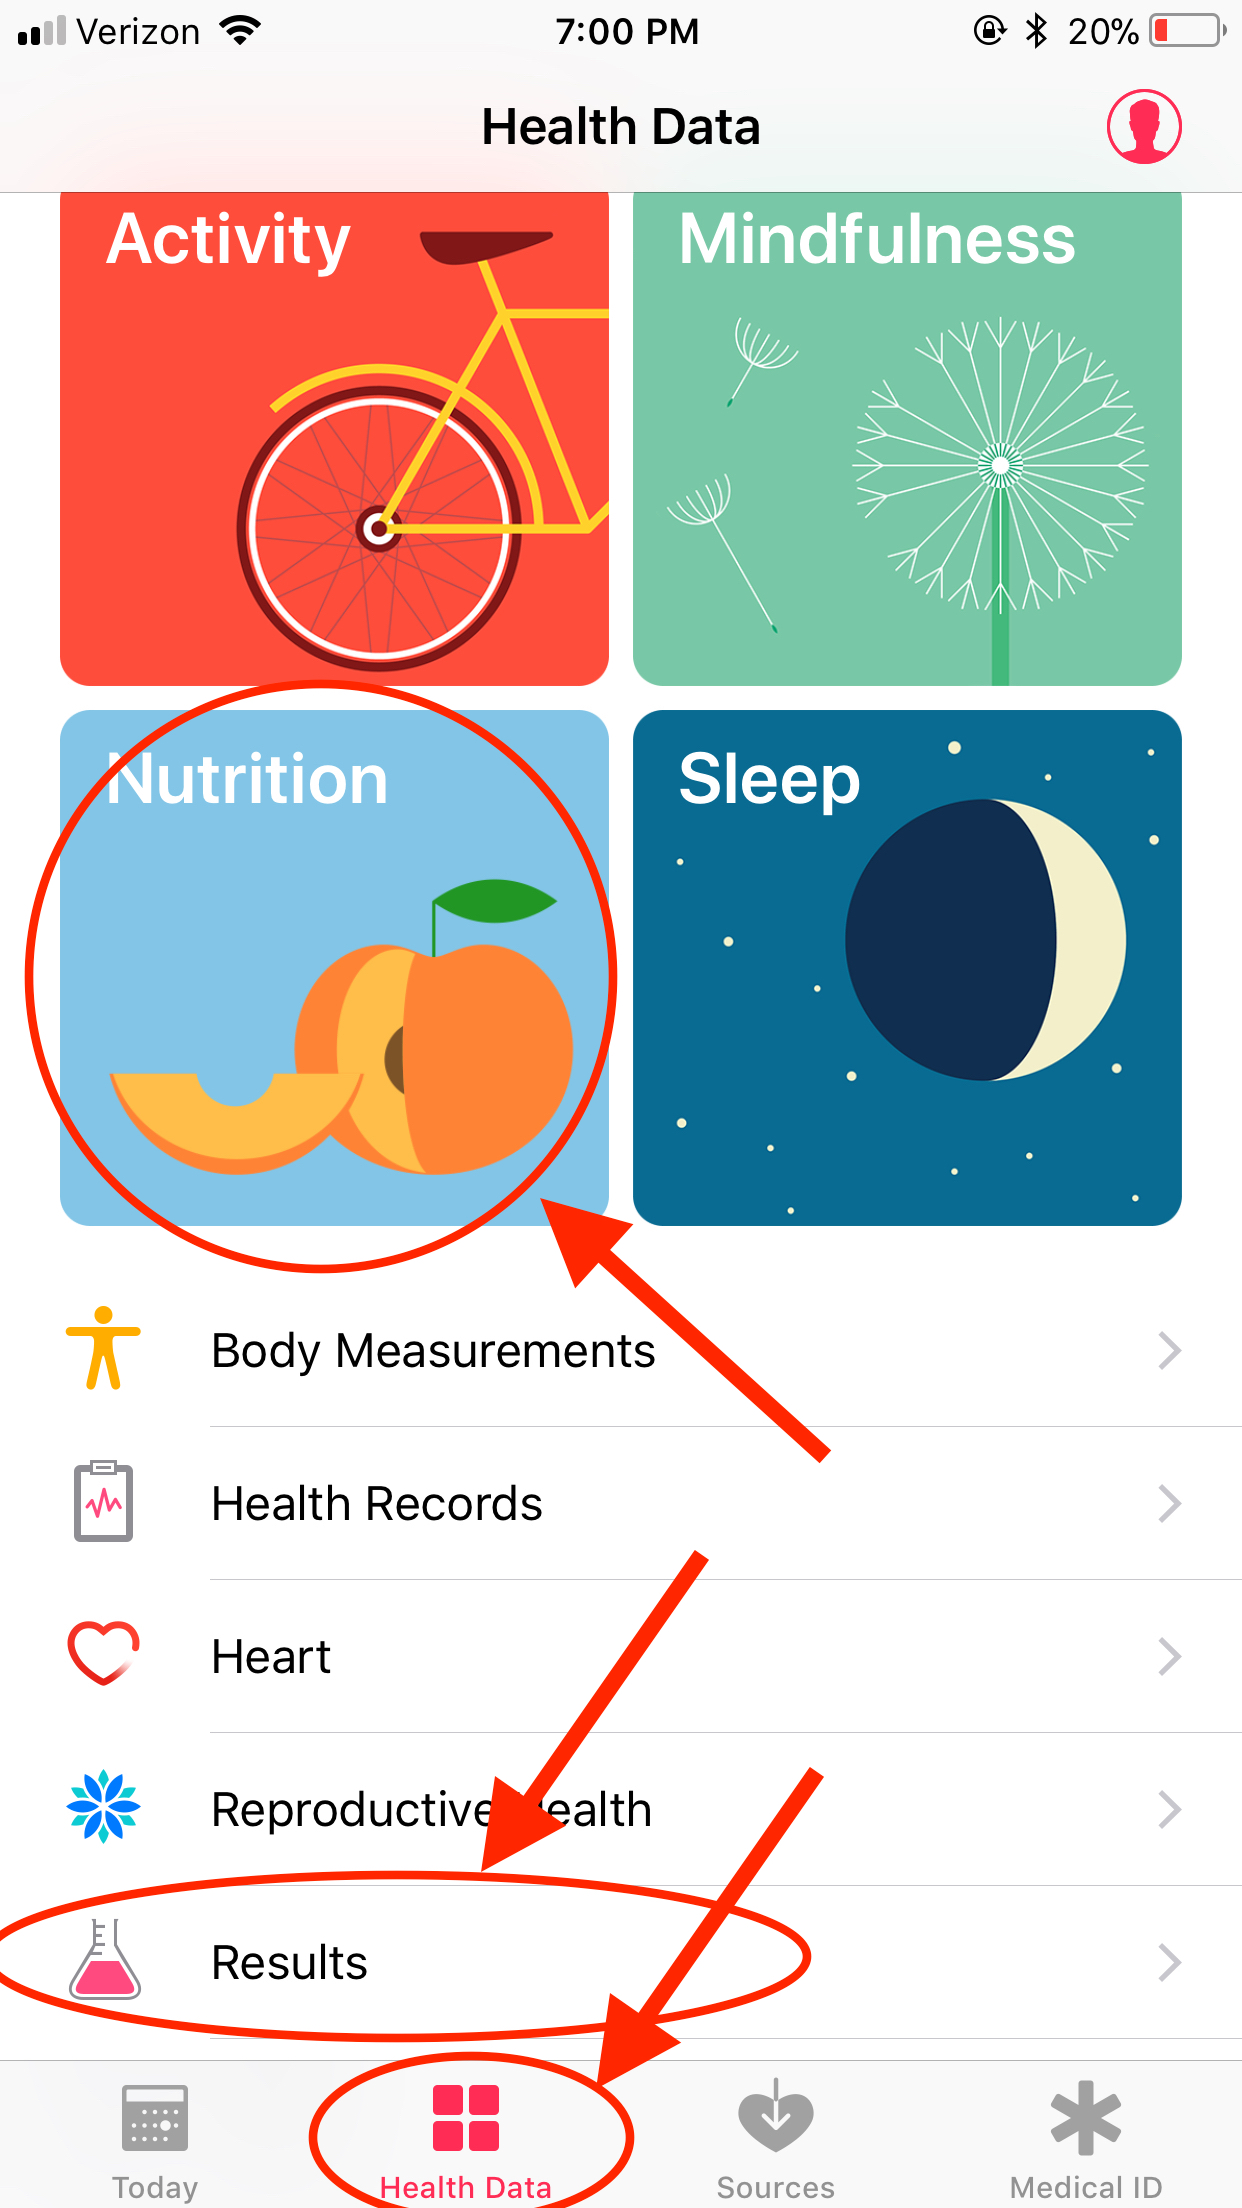 Health Data